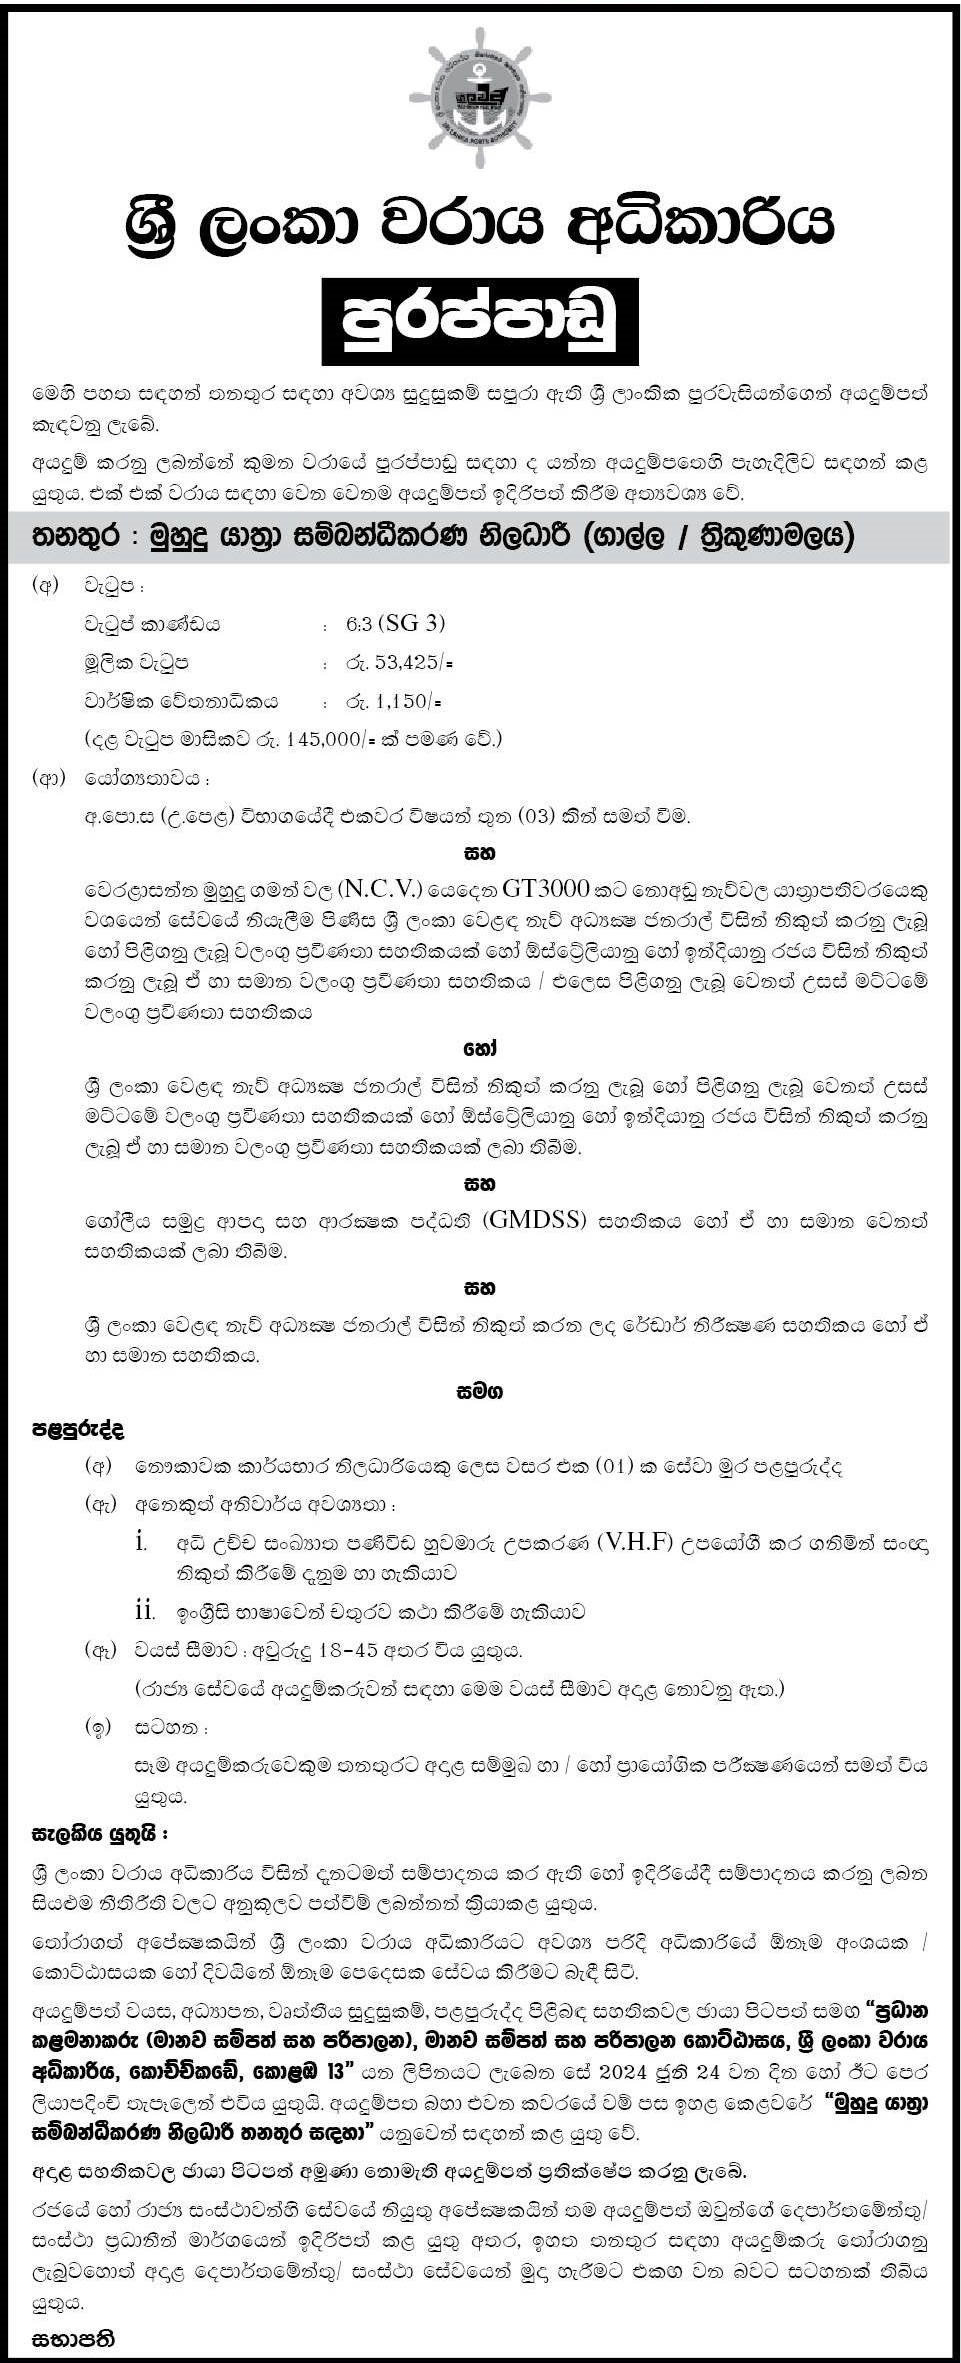 Sea Traffic Coordinator - Sri Lanka Ports Authority (SLPA) Vacancies